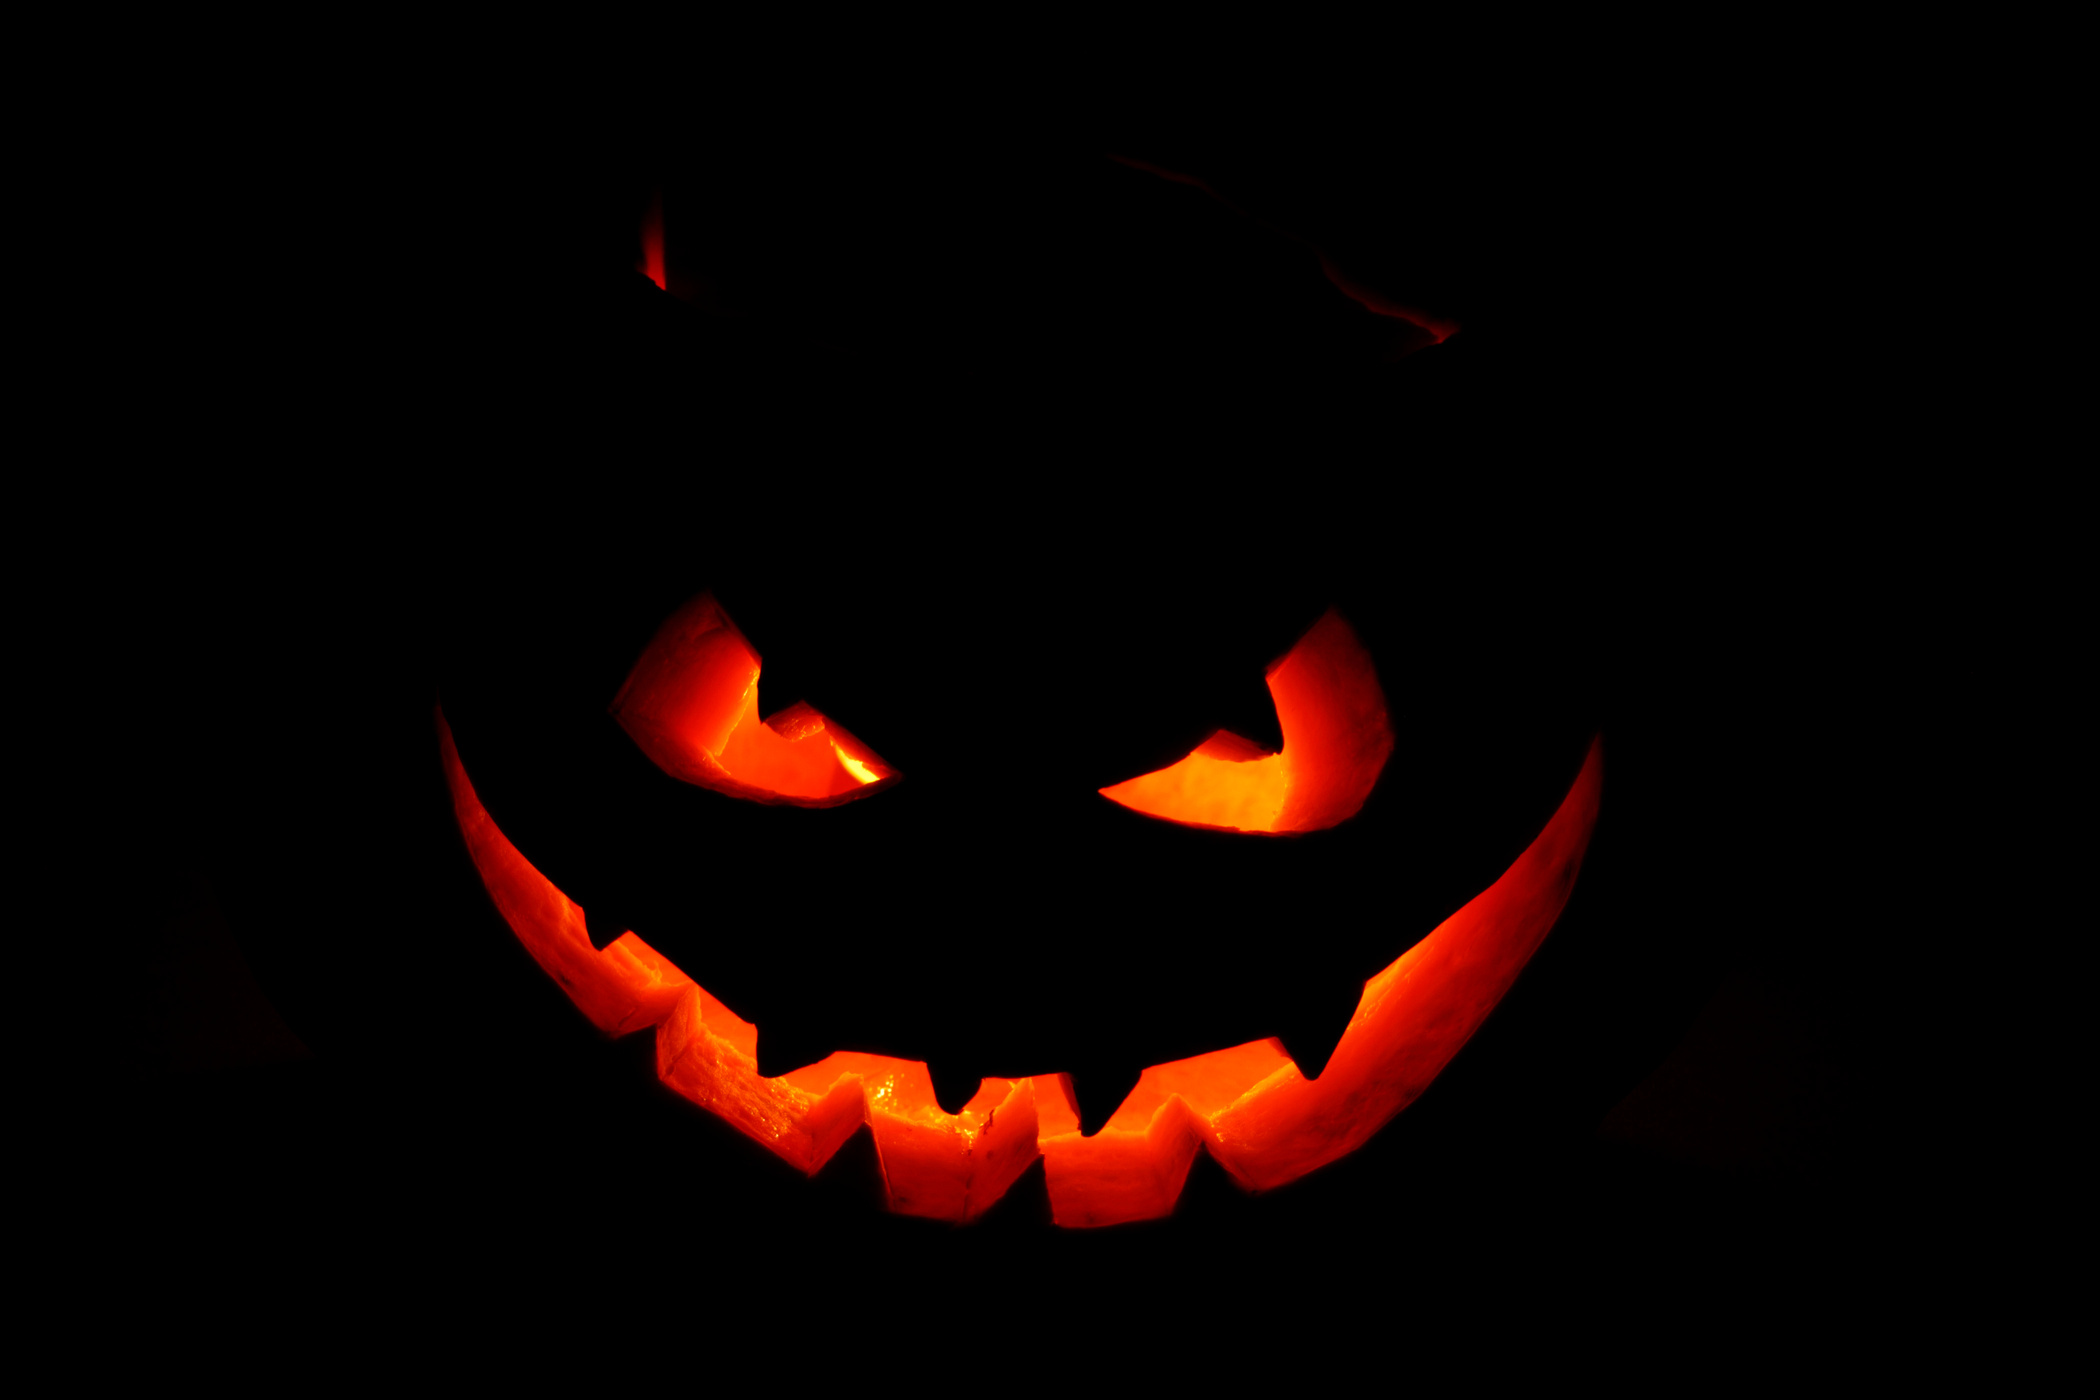 Scary face of Halloween pumpkin